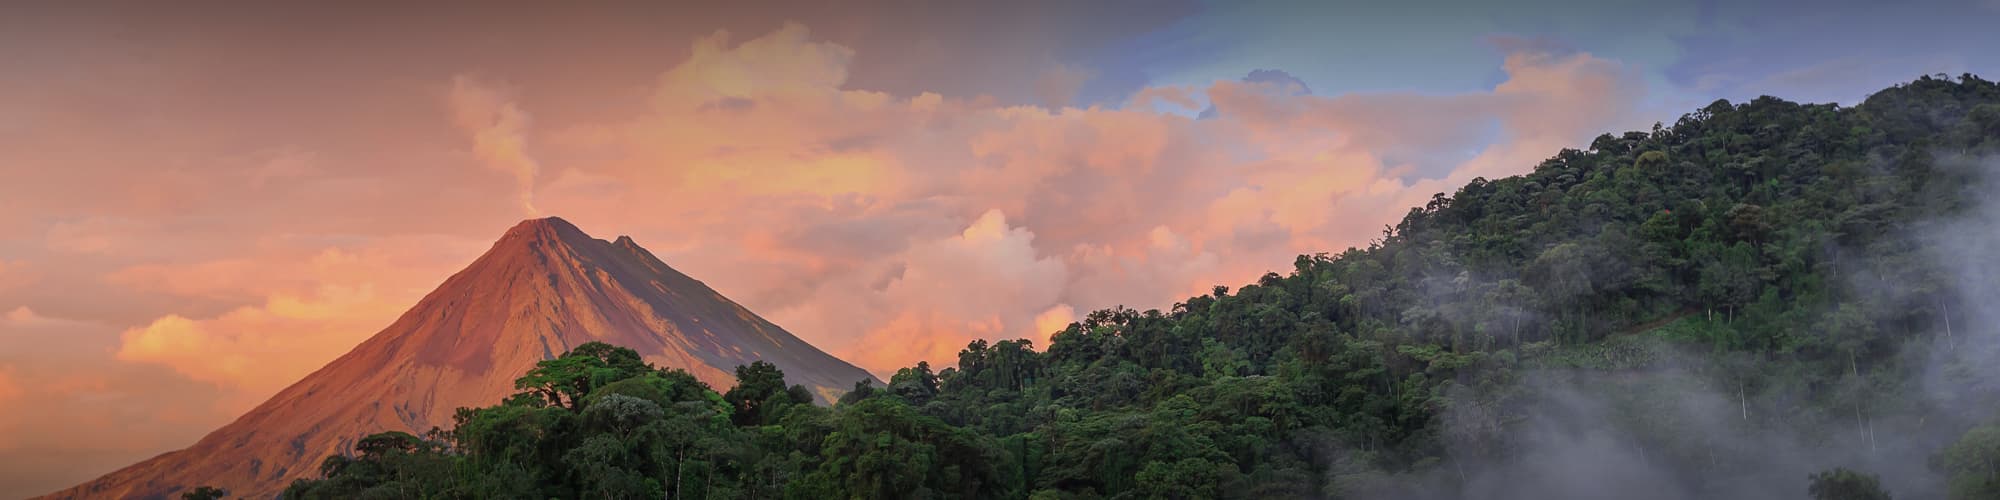 Voyage sur mesure Costa Rica © photodiscoveries / Adobe Stock